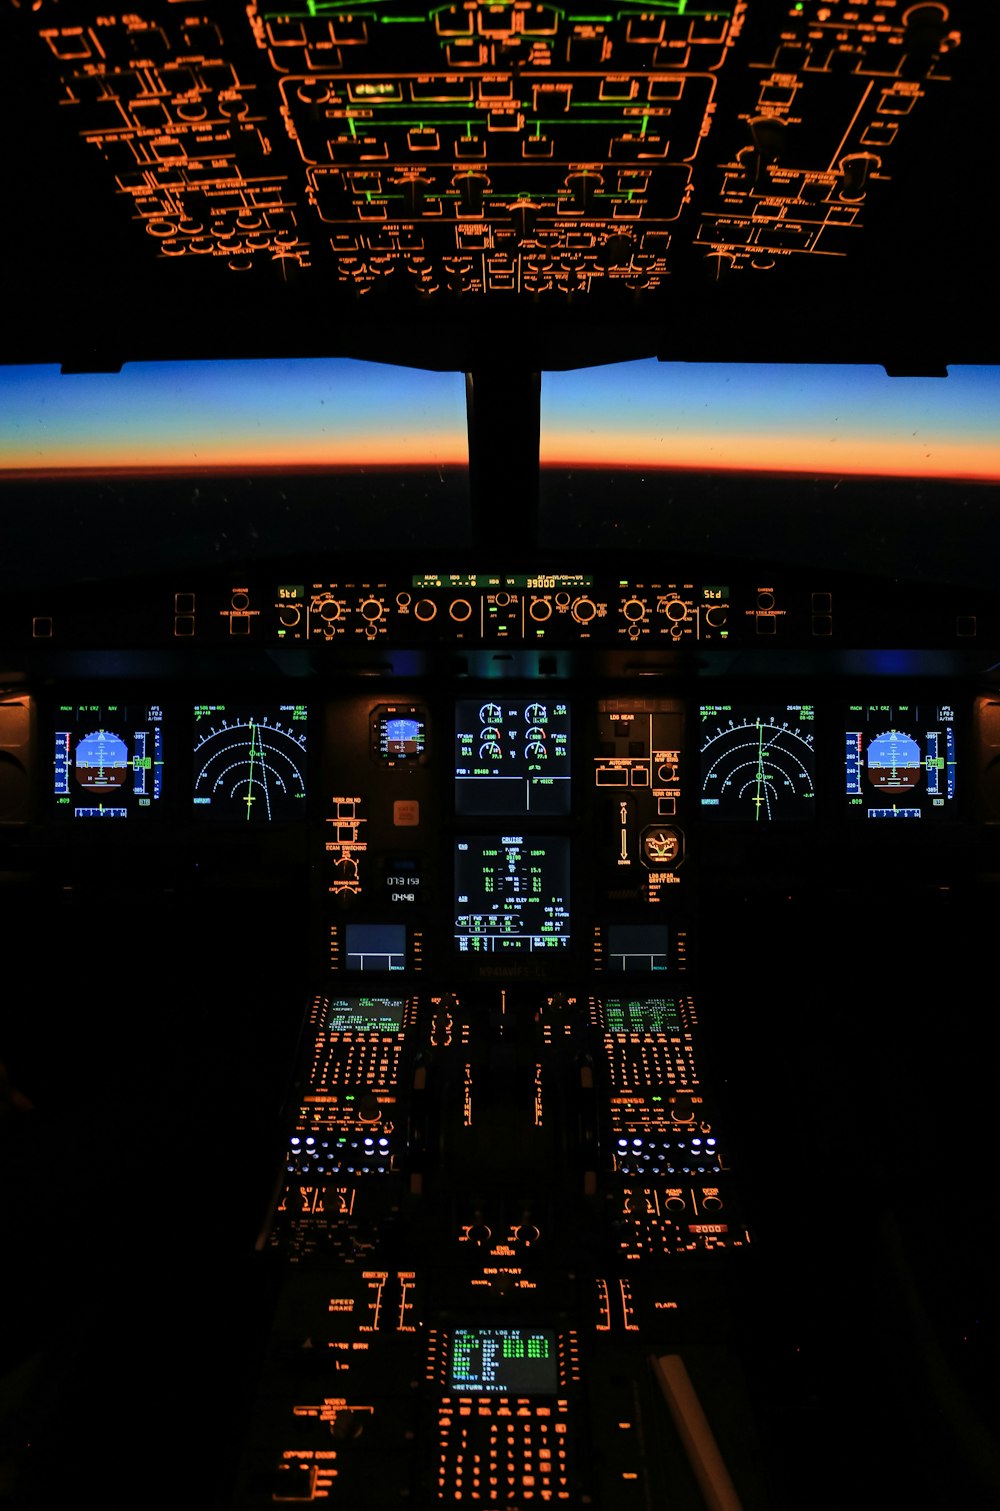 750 Cockpit Pictures Hd Download Free Images On Unsplash